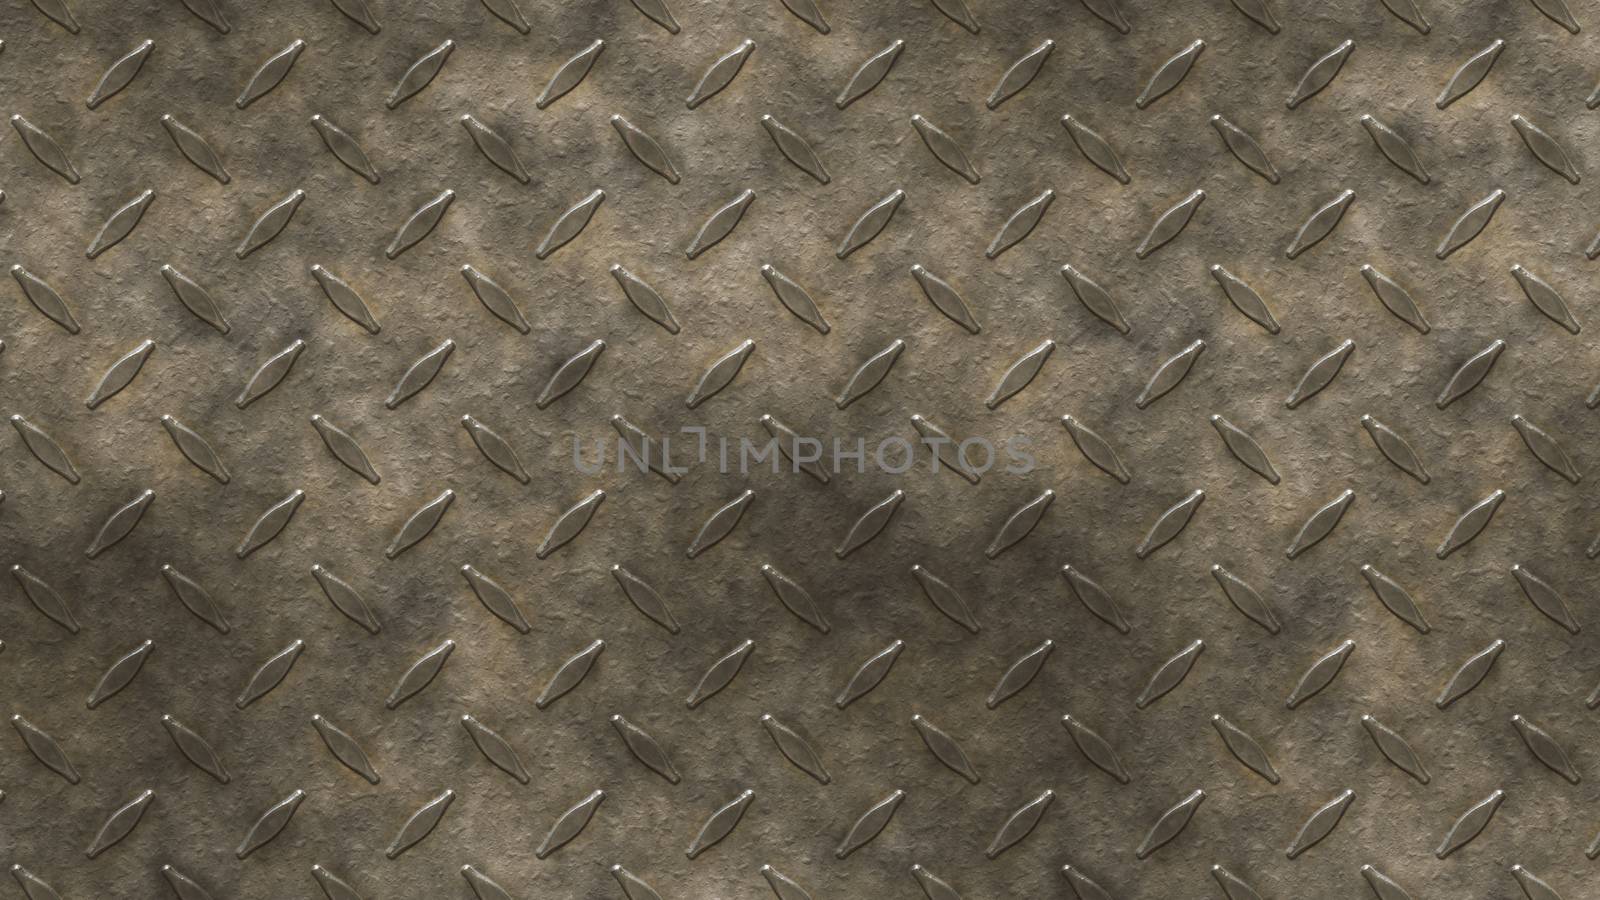 Illustration of a rusty diamond metal plate texture